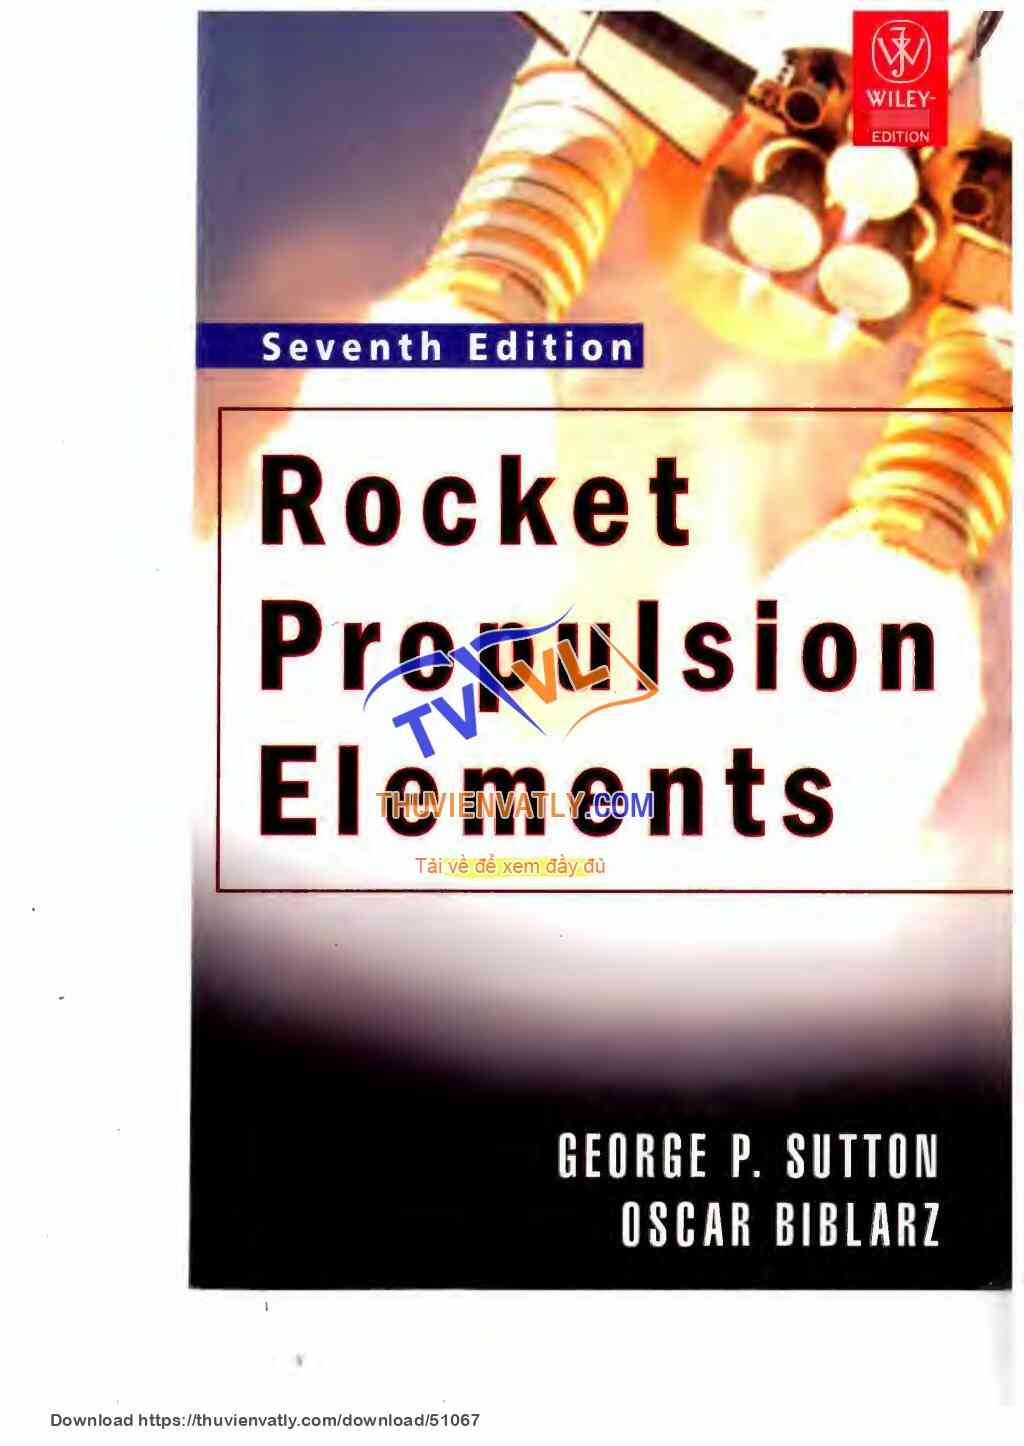 Rocket propulsion elementsRocket propulsion elements